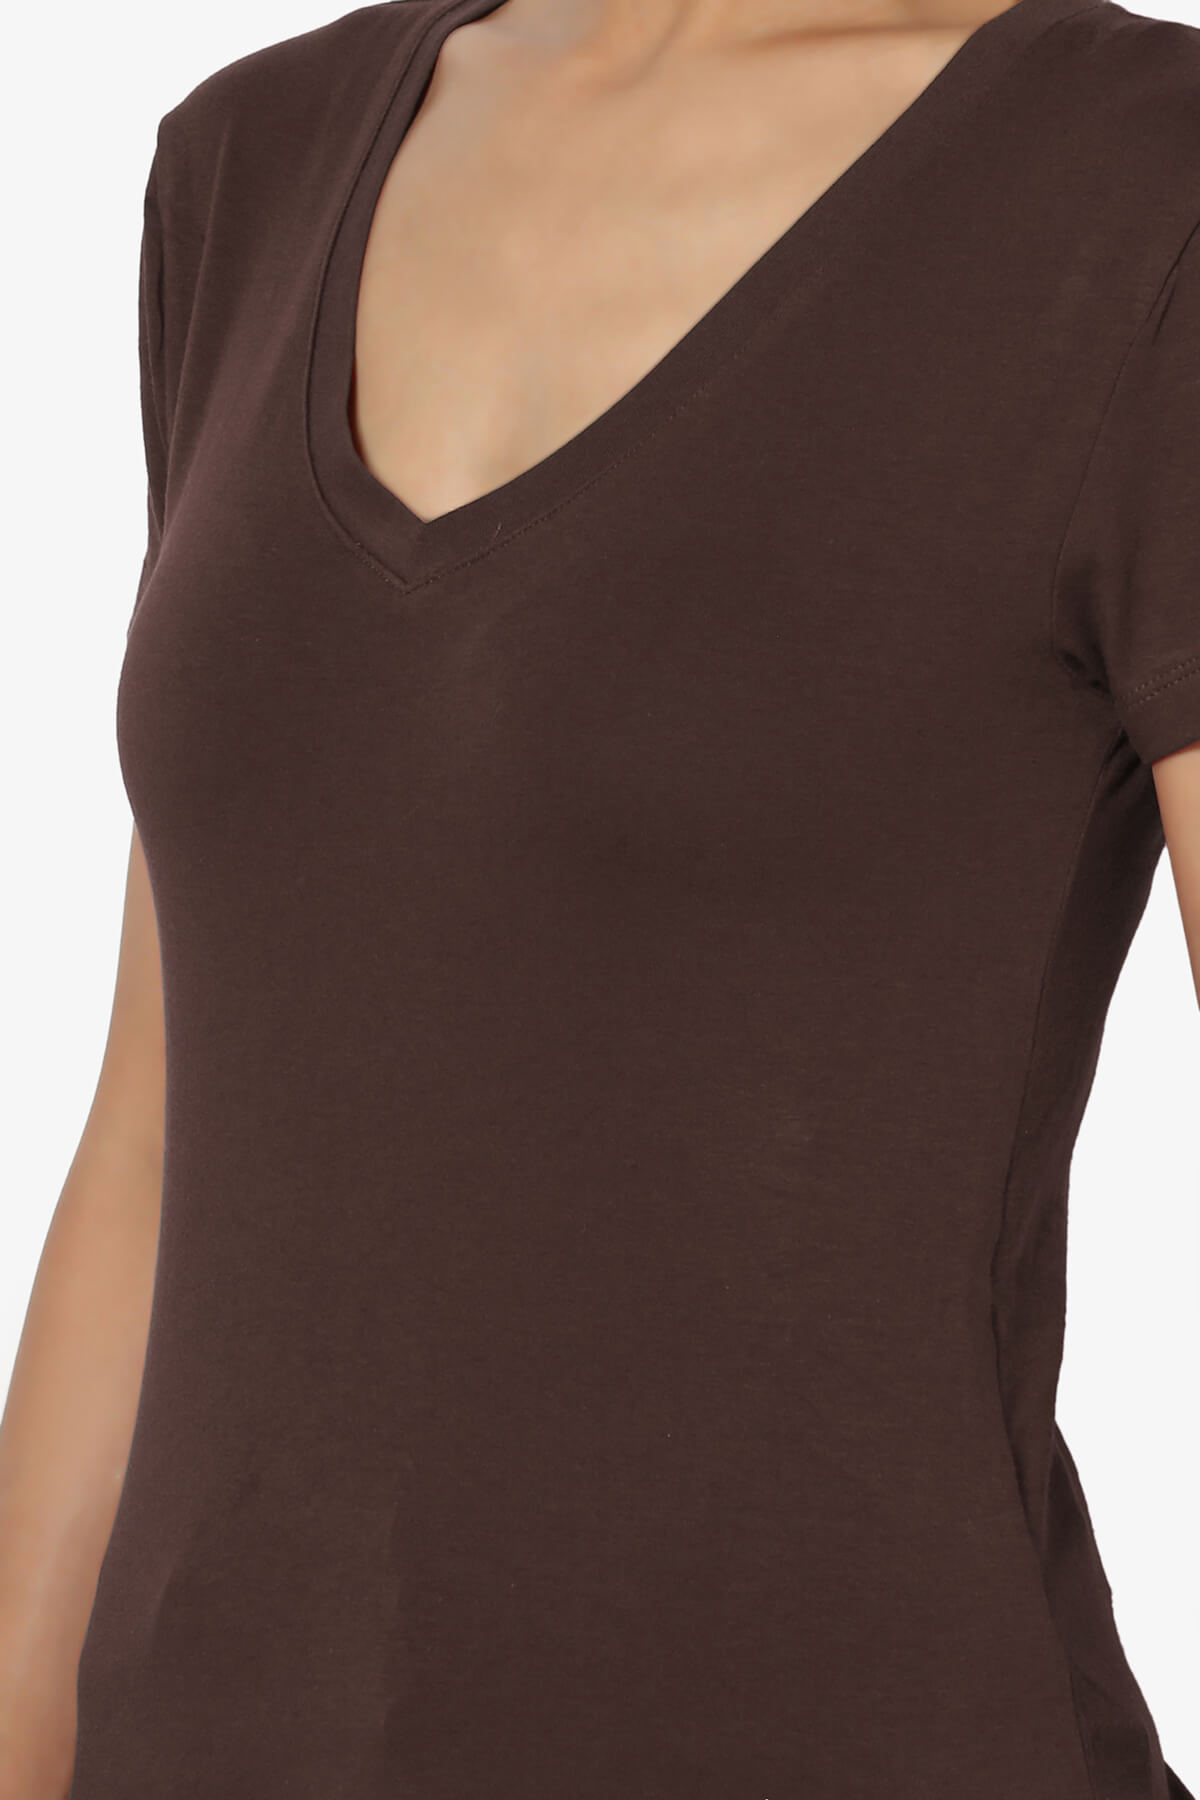 Women's Basic V Neck Short Sleeve T-Shirts Plain Stretch Cotton Spandex Top Tee - image 5 of 6